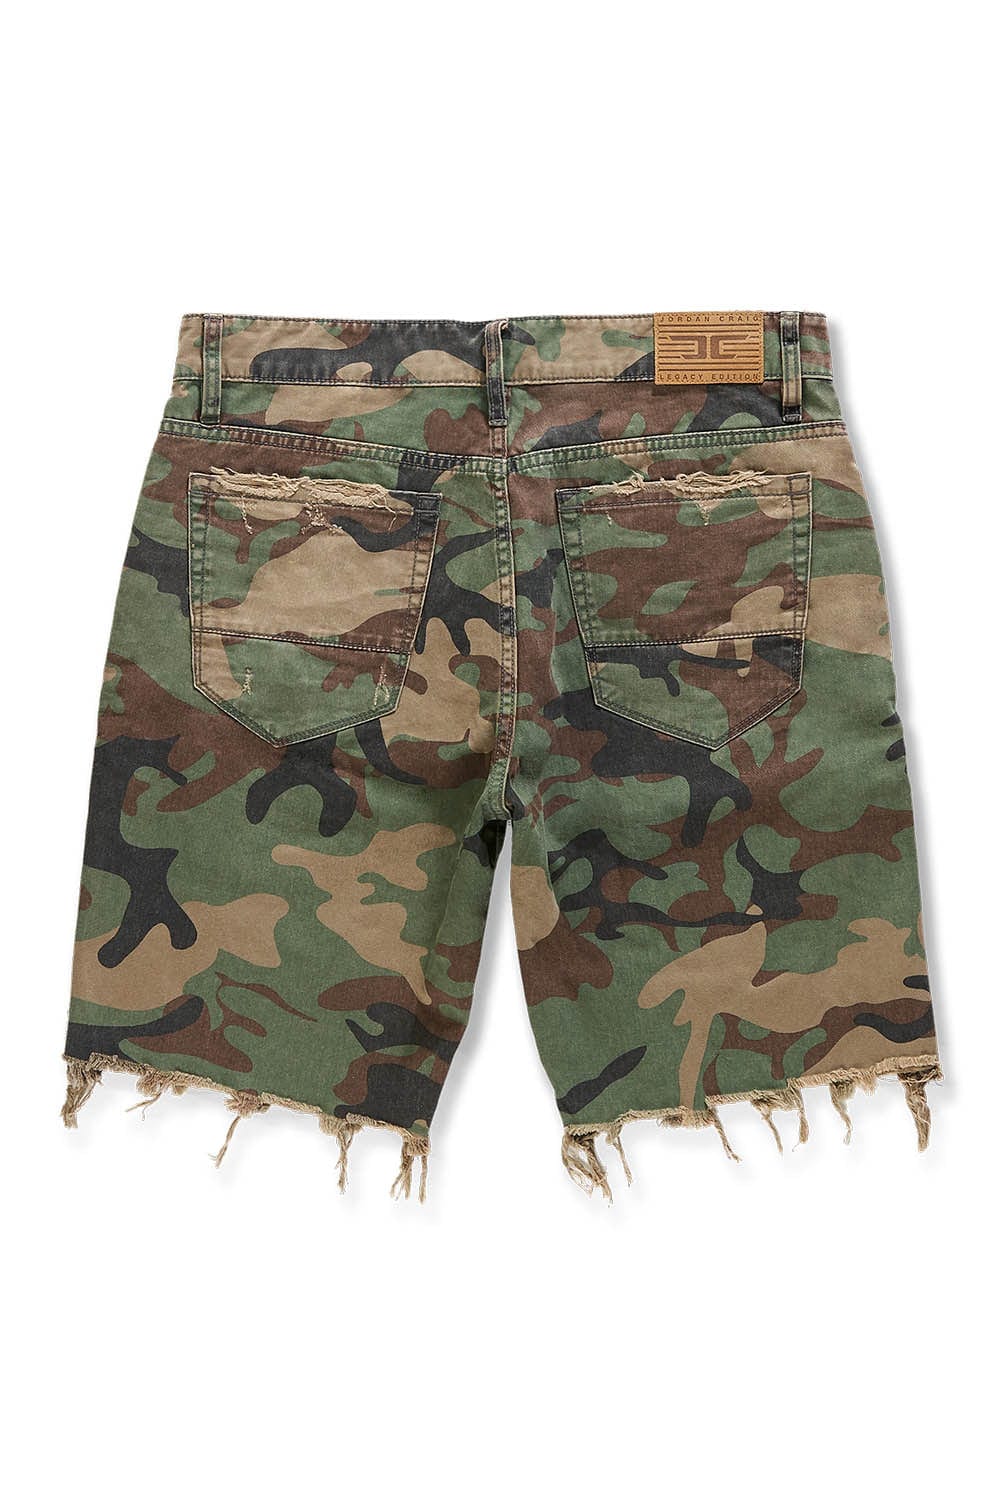 Retro - Infantry Twill Shorts (Vintage Camo)